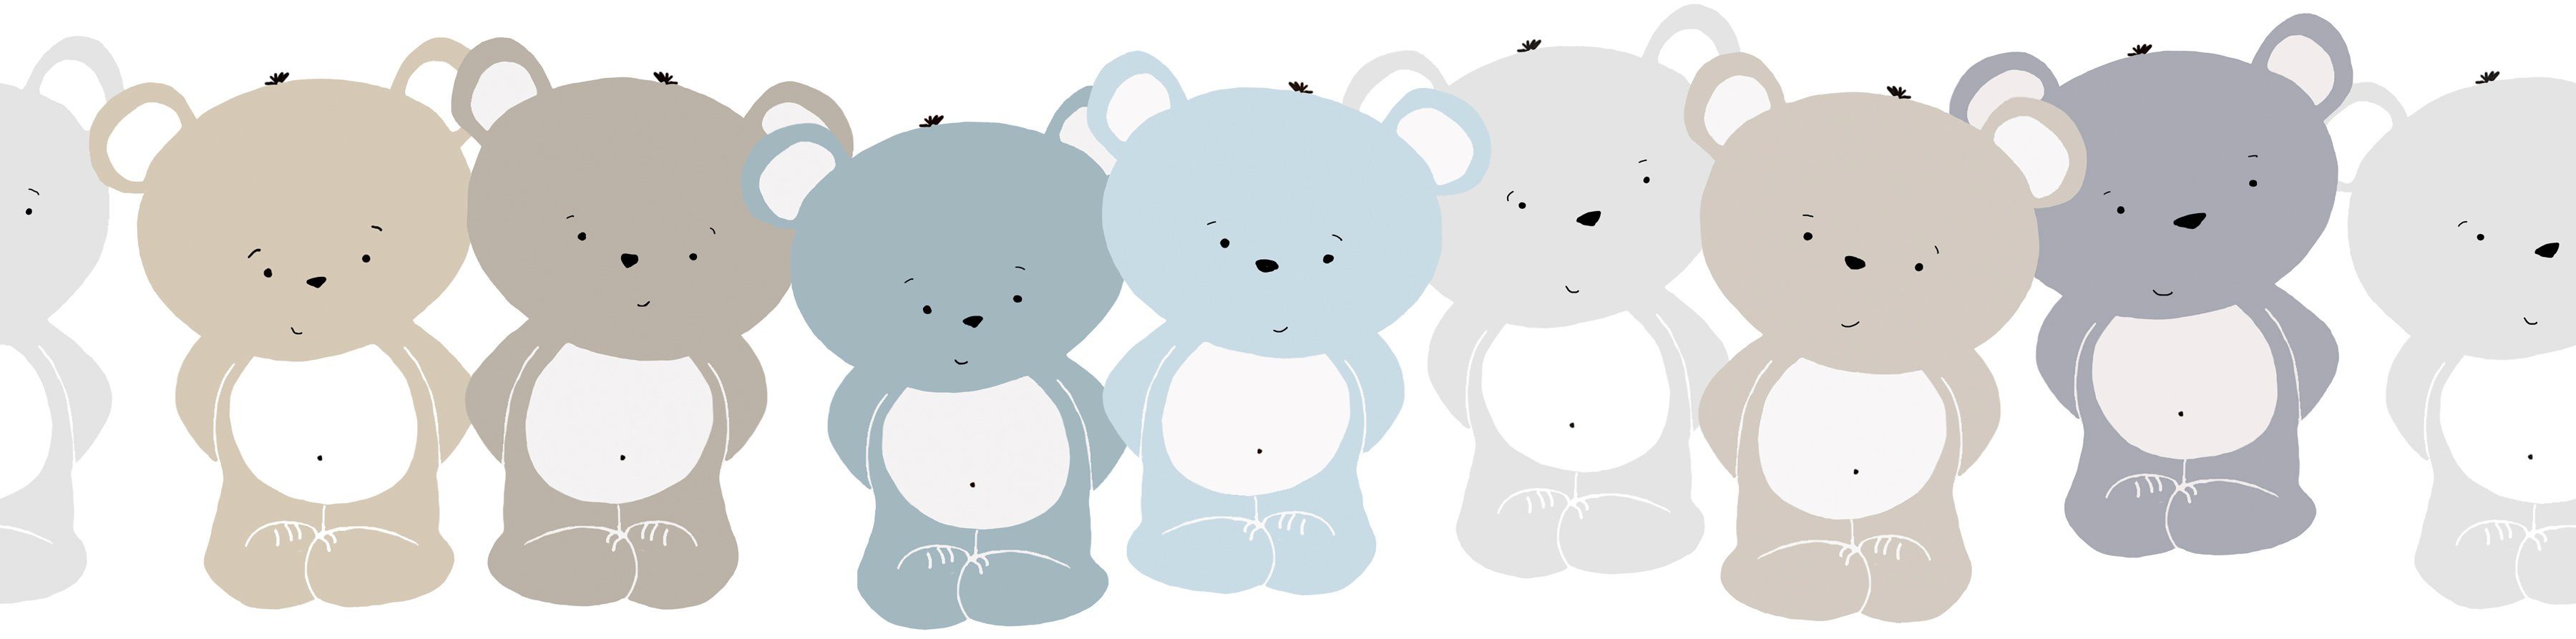 Tapete Blau glatt, Bordüre Création Braun Weiß A.S. Kinderzimmer Cute Bears,